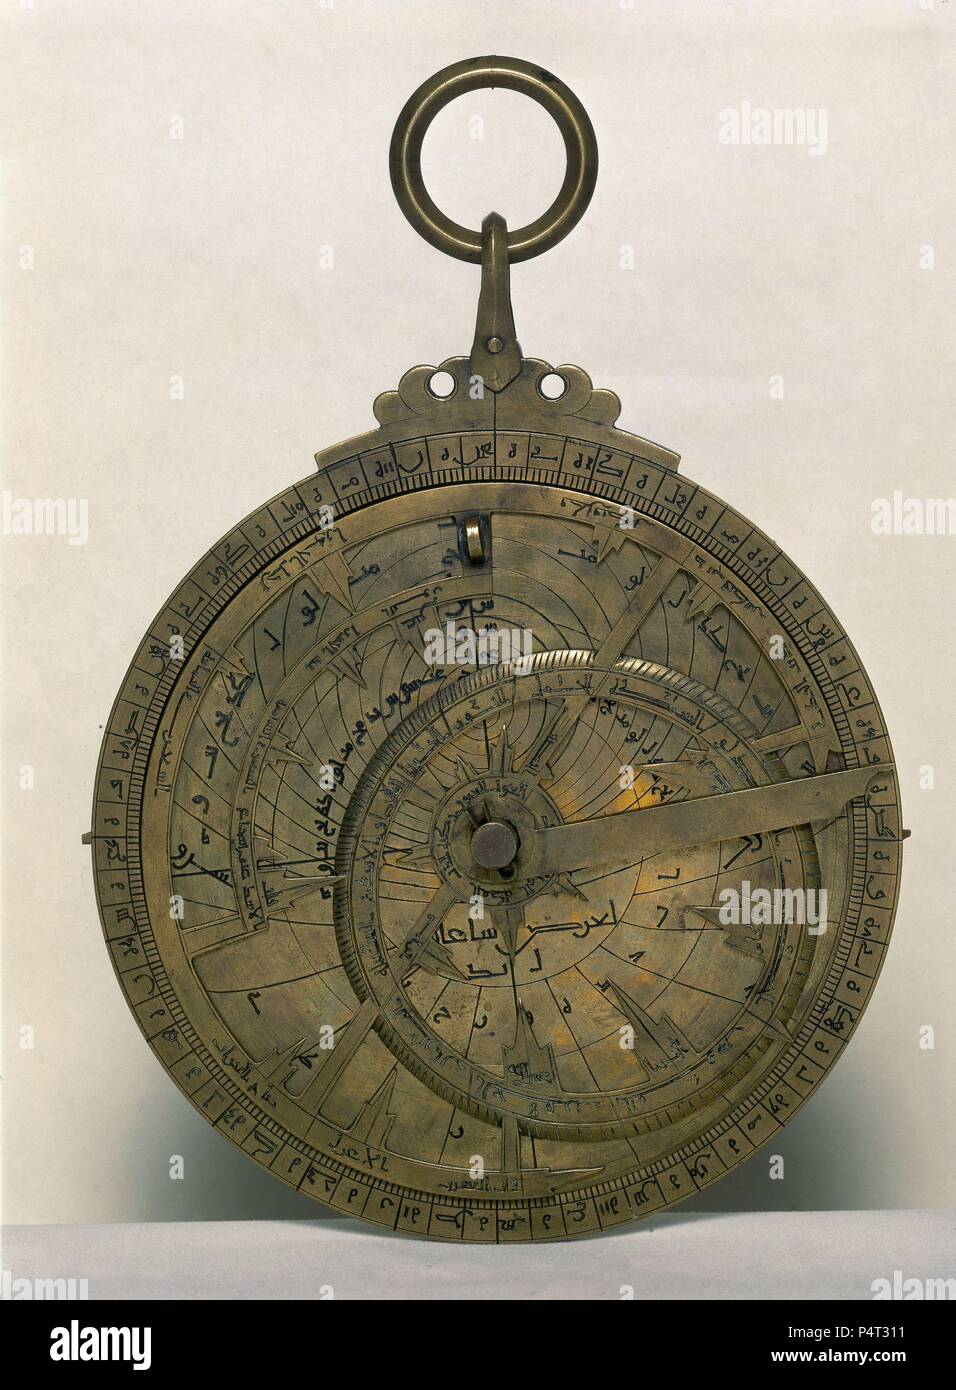 ASTROLABIO DE Alfonso X El Sabio - año 1002 - DIAMETRO 162. Lage: Museo Naval / MINISTERIO DE MARINA, MADRID, SPANIEN. Stockfoto